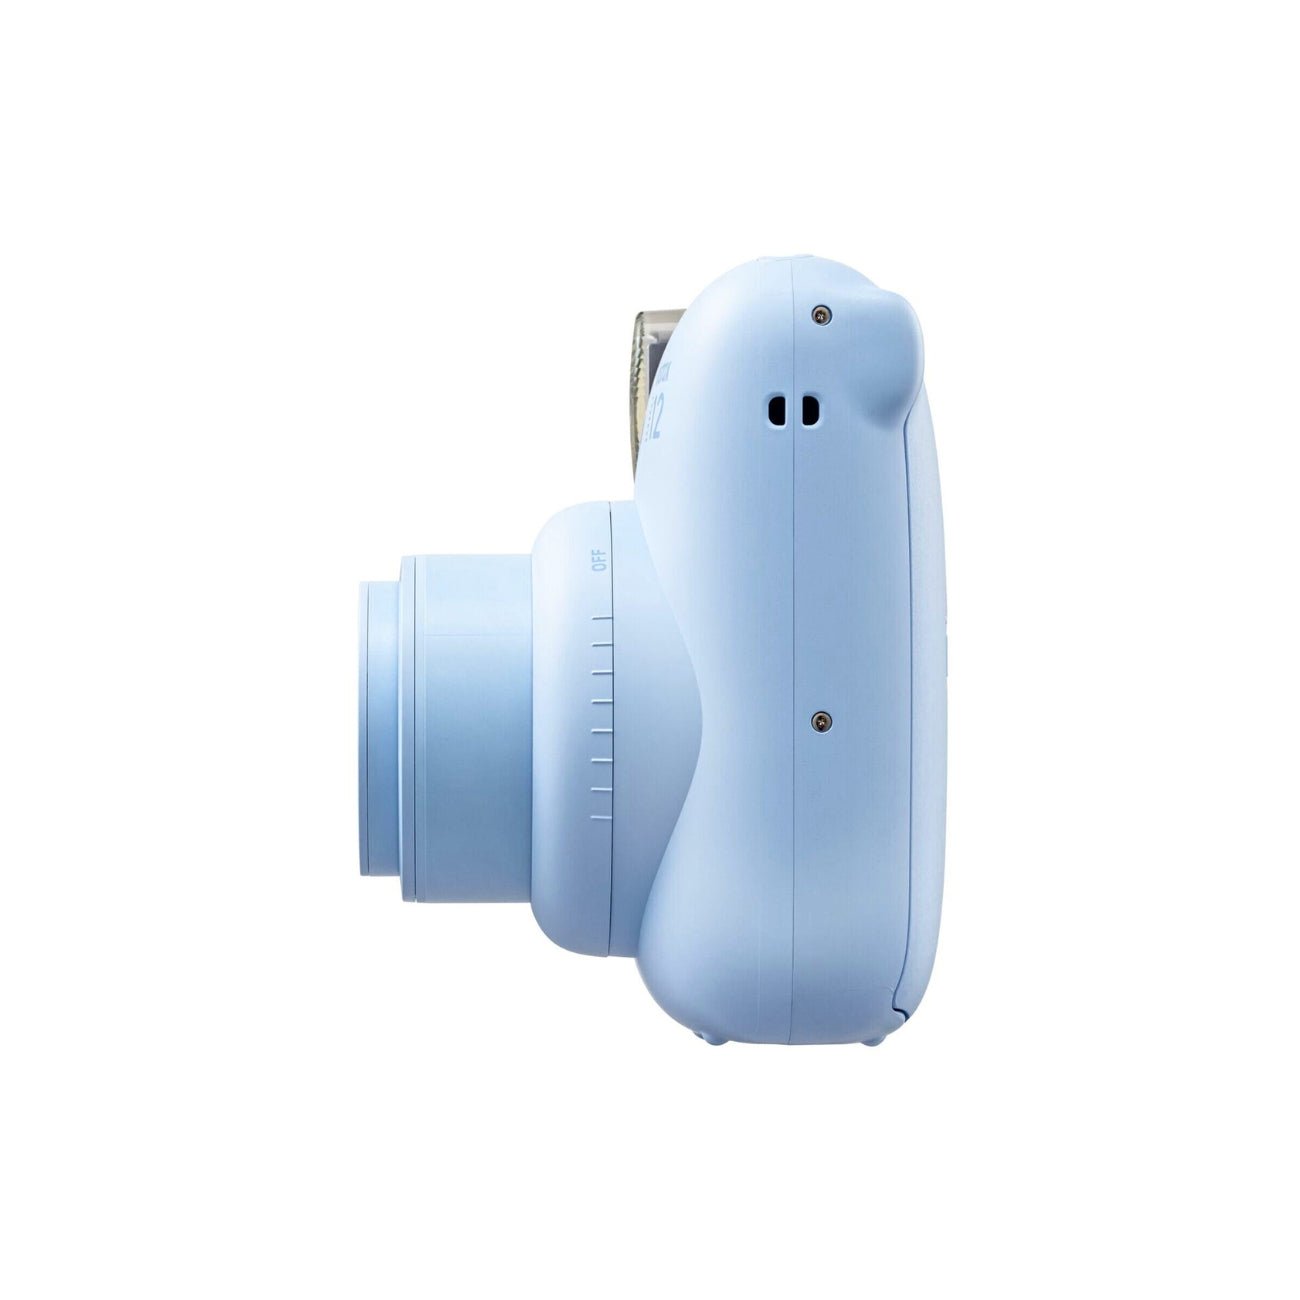 Fujifilm INSTAX Mini 12 Instant Film Camera (Blue) - Side view